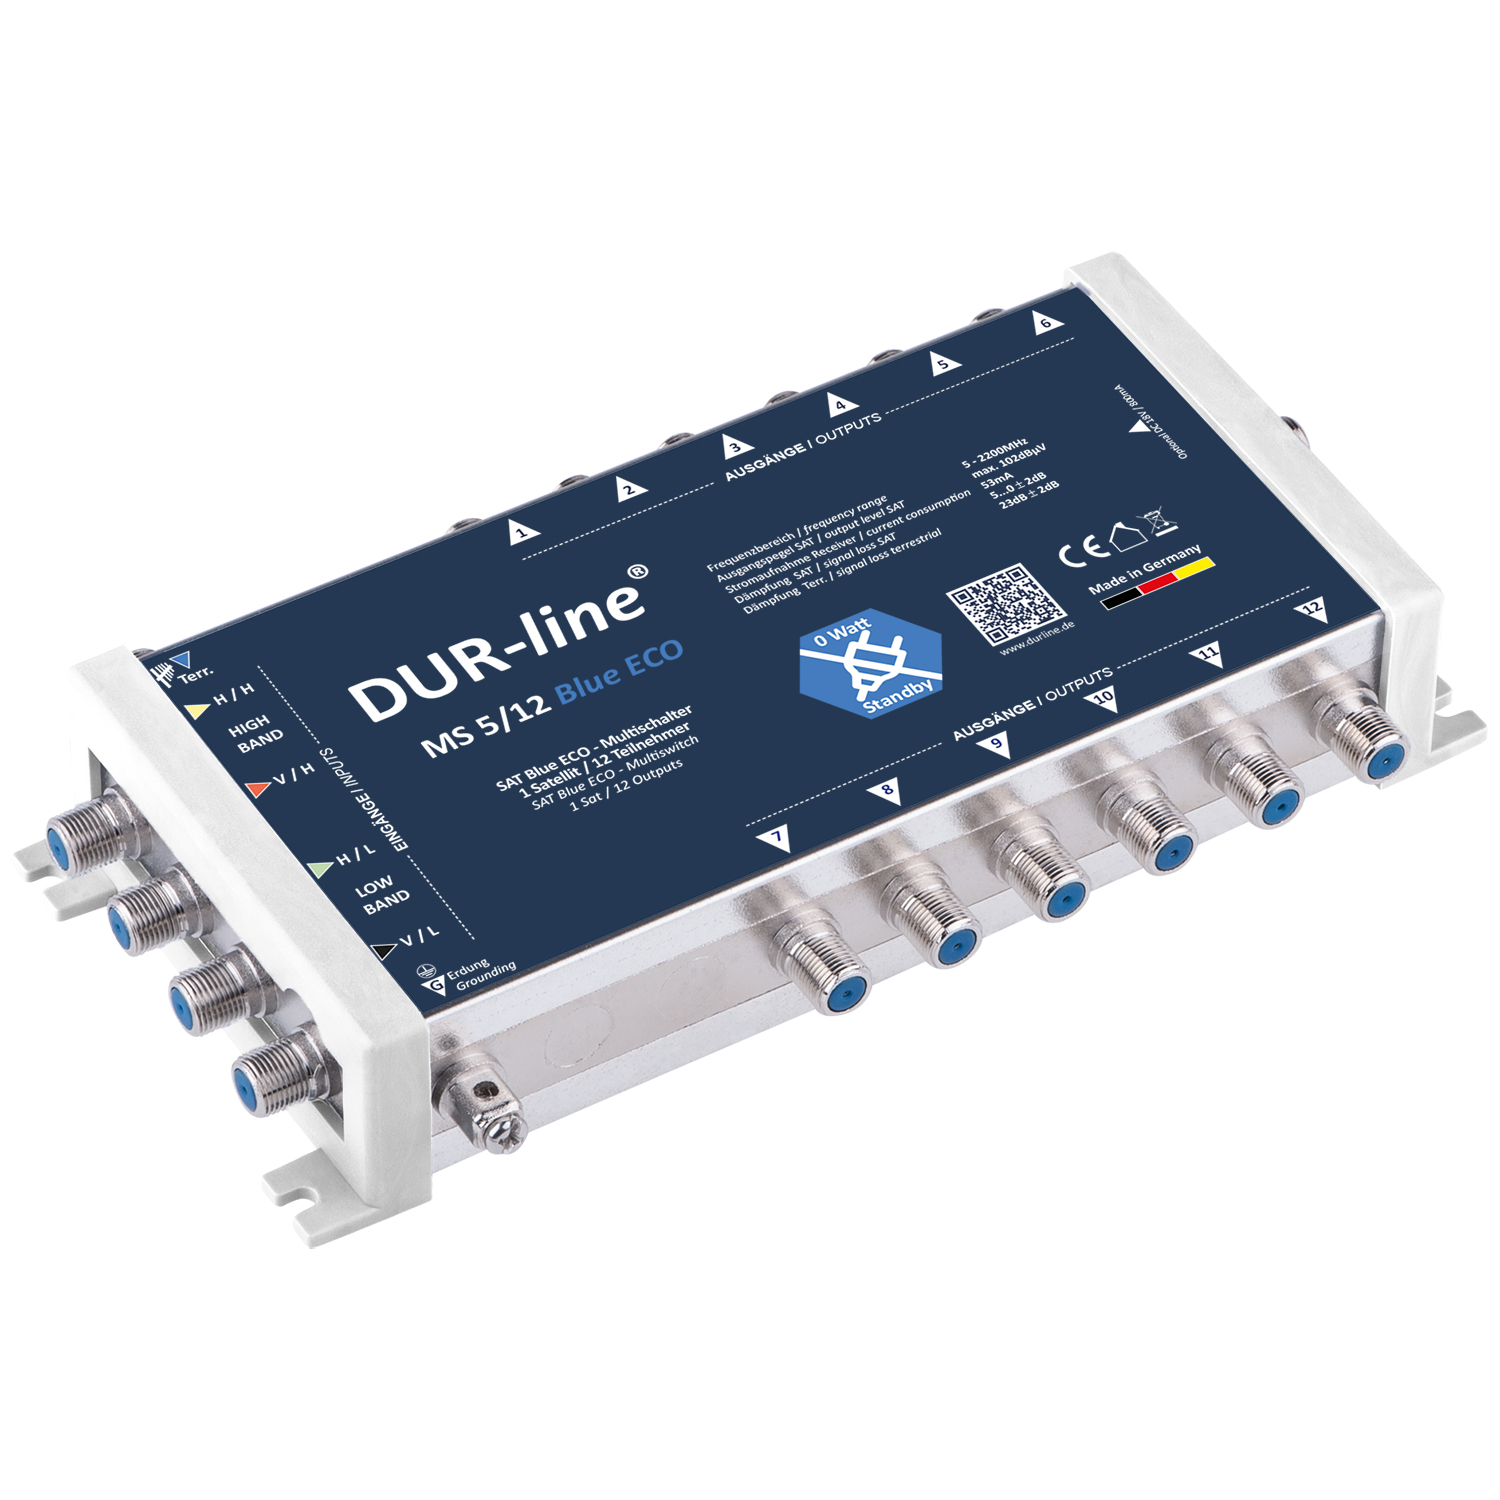 DUR-line MS 5/12 Blue ECO - Multischalter